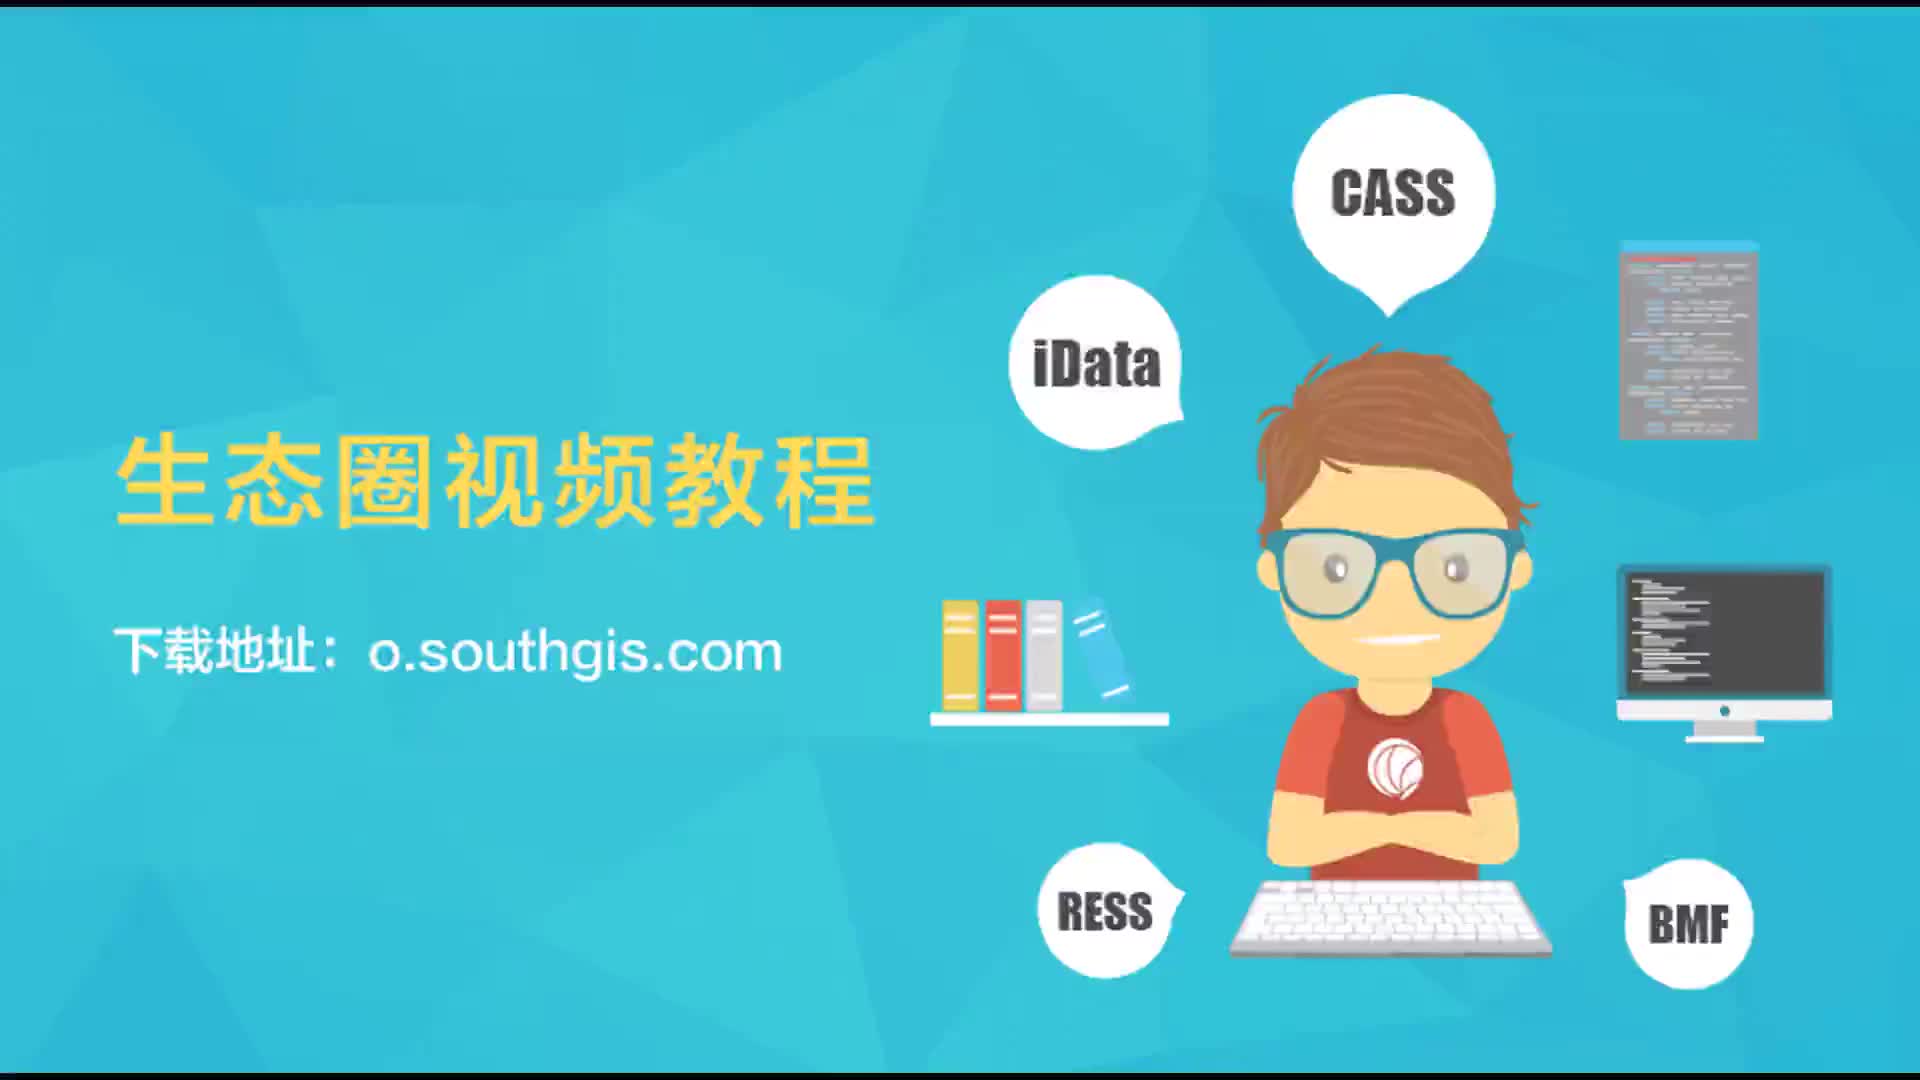 【CASS10.0教程合集】南方cass10.0教程，软件运用技巧，便捷操作，新手必备课程。